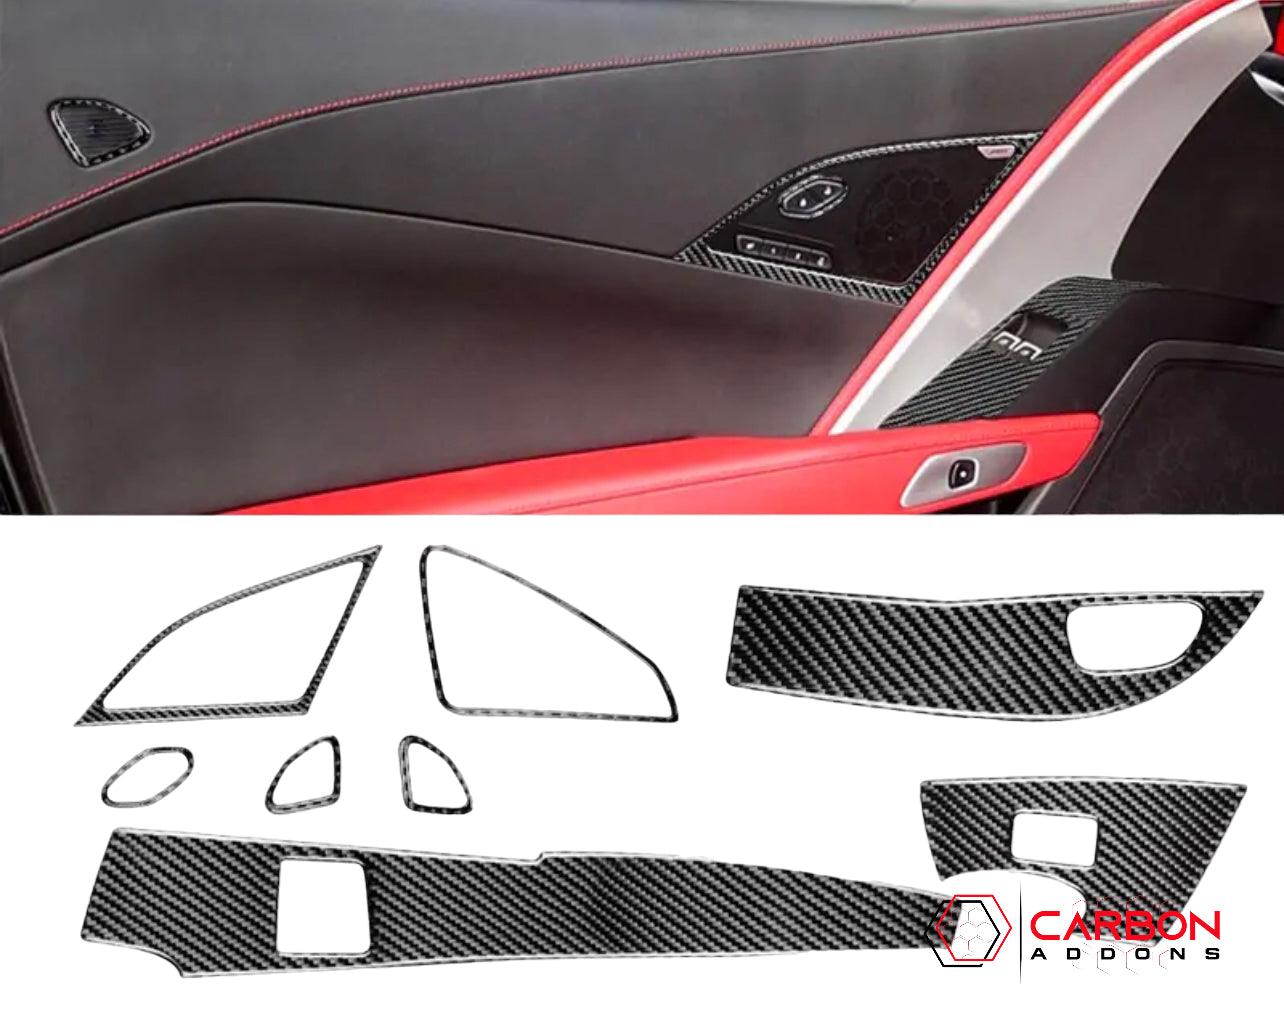 C7 Corvette 2014-2019 Door Panel Trim Carbon Fiber Overlay - carbonaddons Carbon Fiber Parts, Accessories, Upgrades, Mods